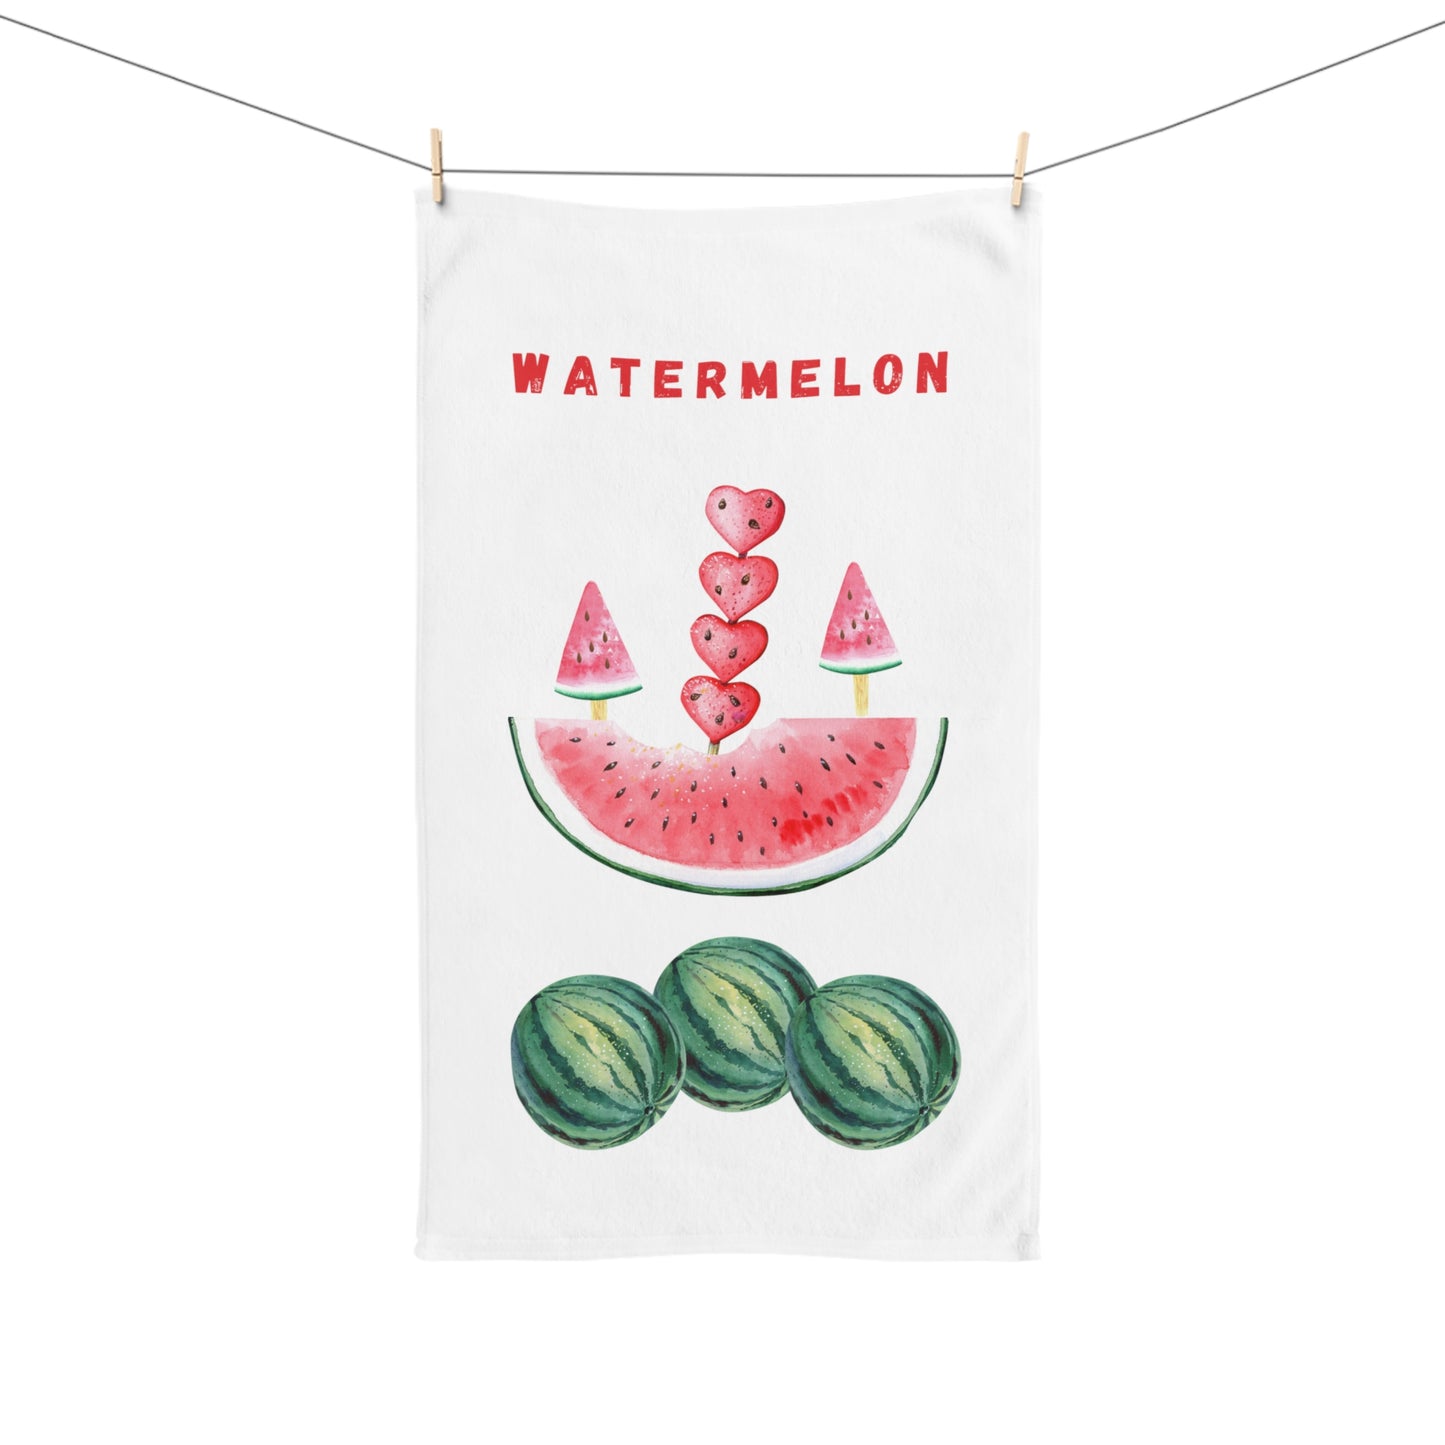 Watermelon Theme Hand Towel, Cup Towel, Tea Towel by PC Designs